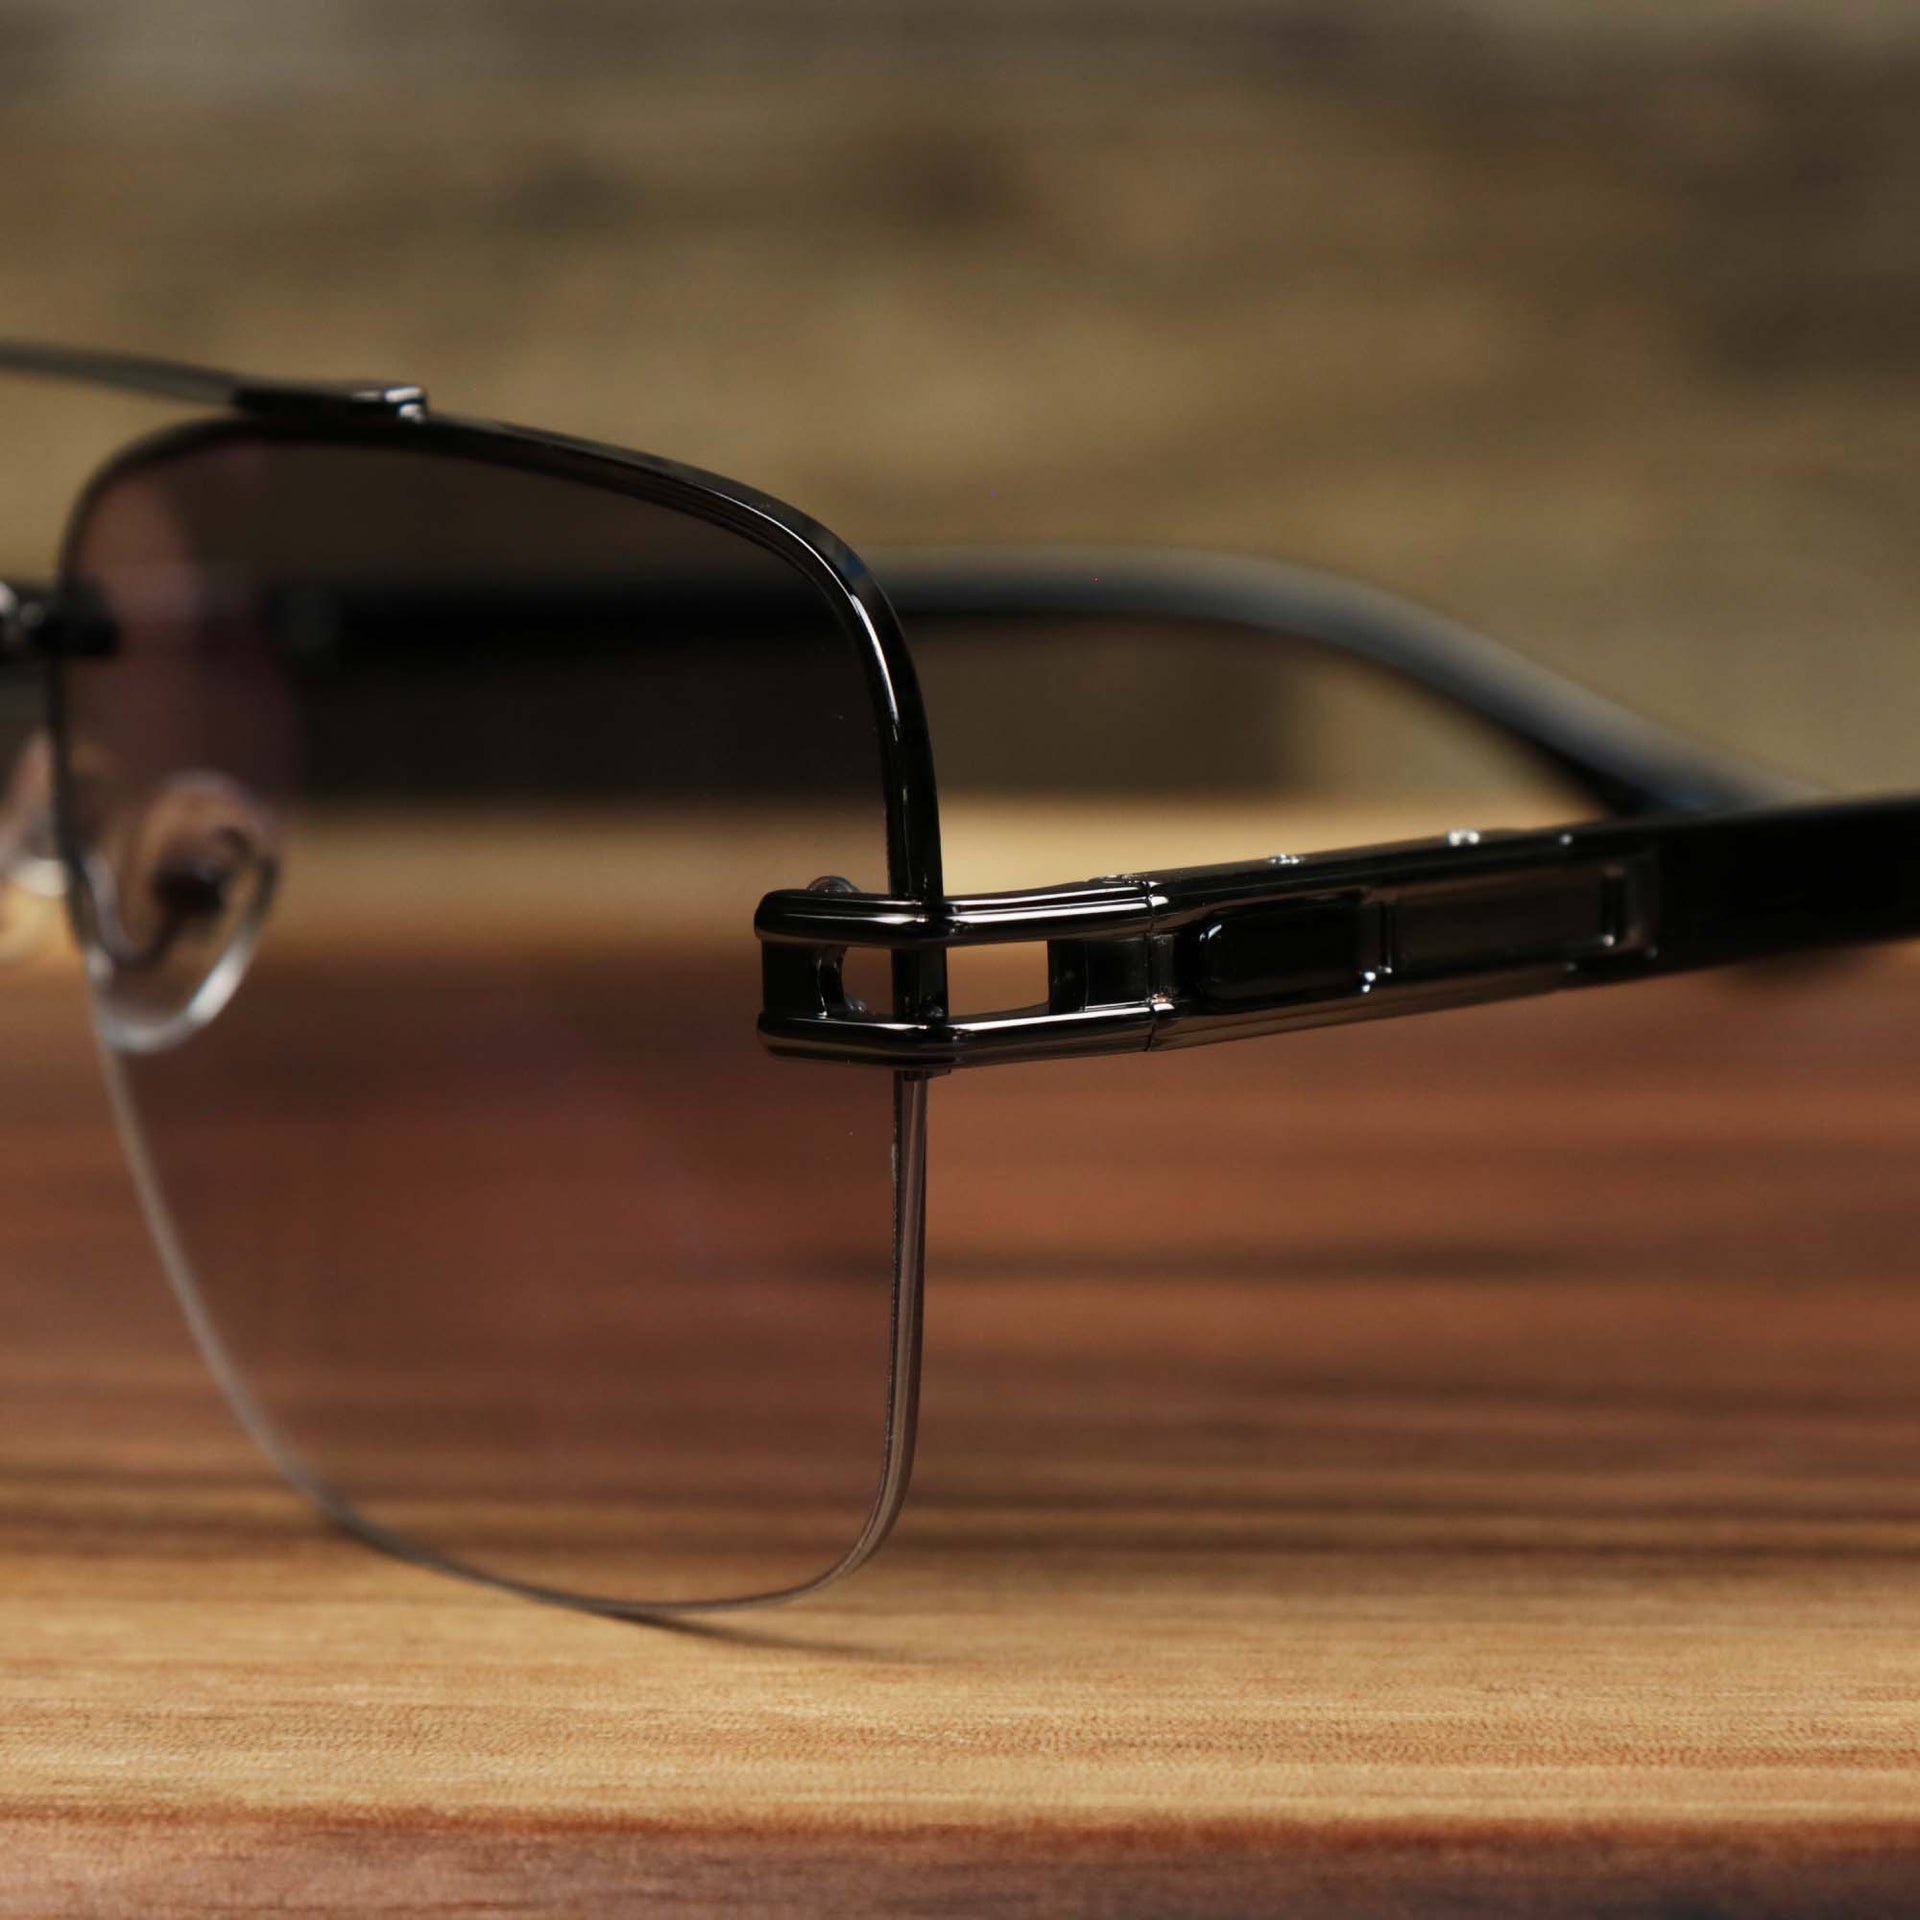 The hinge on the Round Rectangle Frame Black Lens Sunglasses with Black Frame